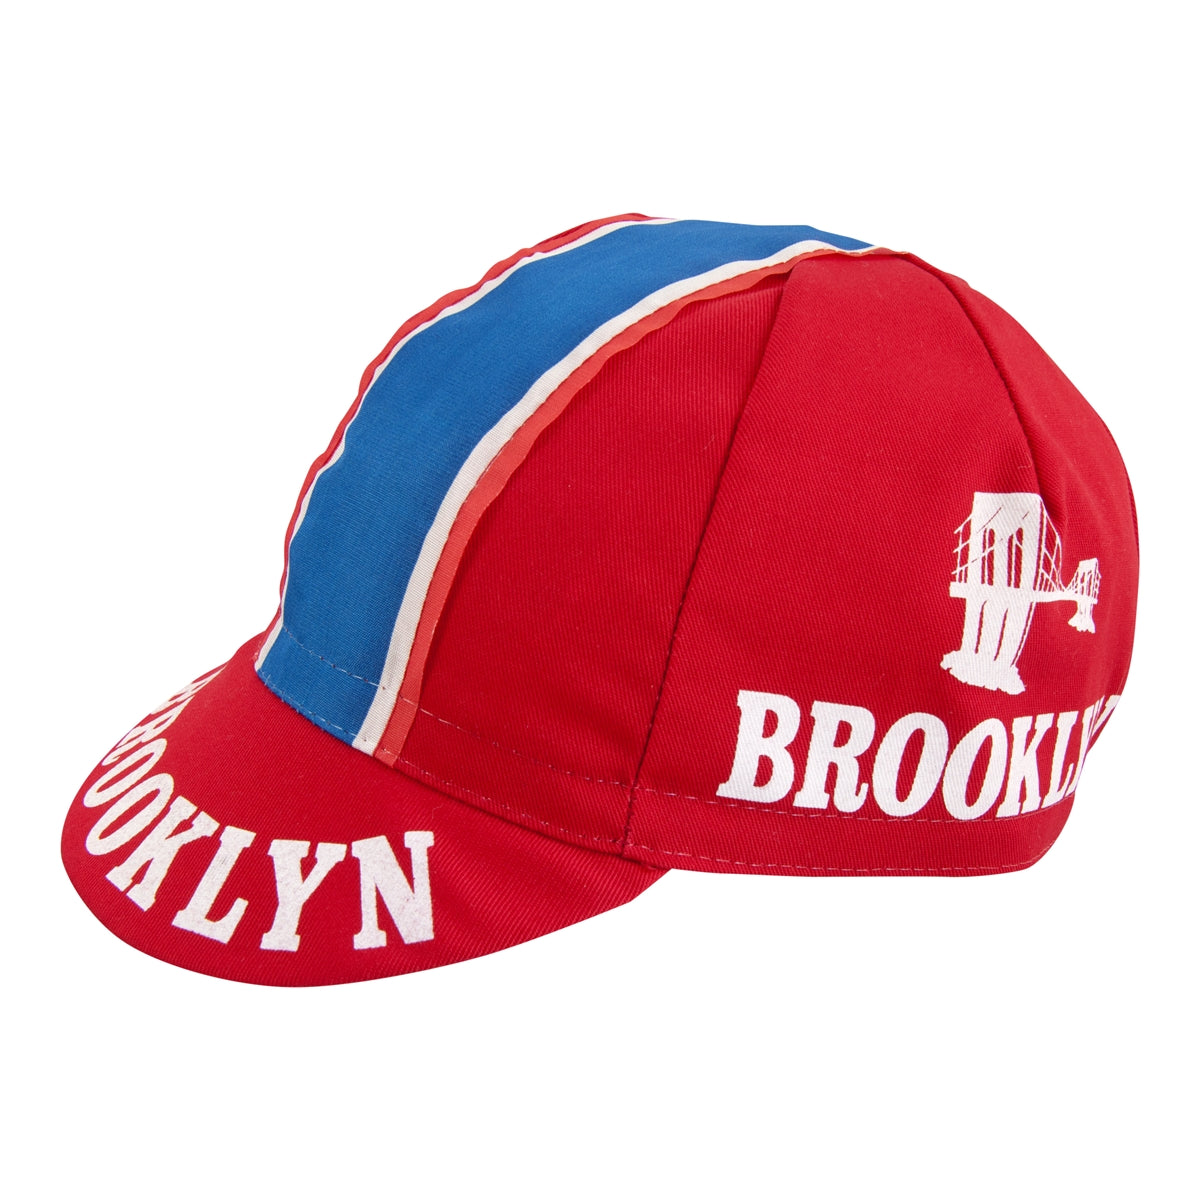 Apis Brooklyn Vintage Cycling Cap - Red